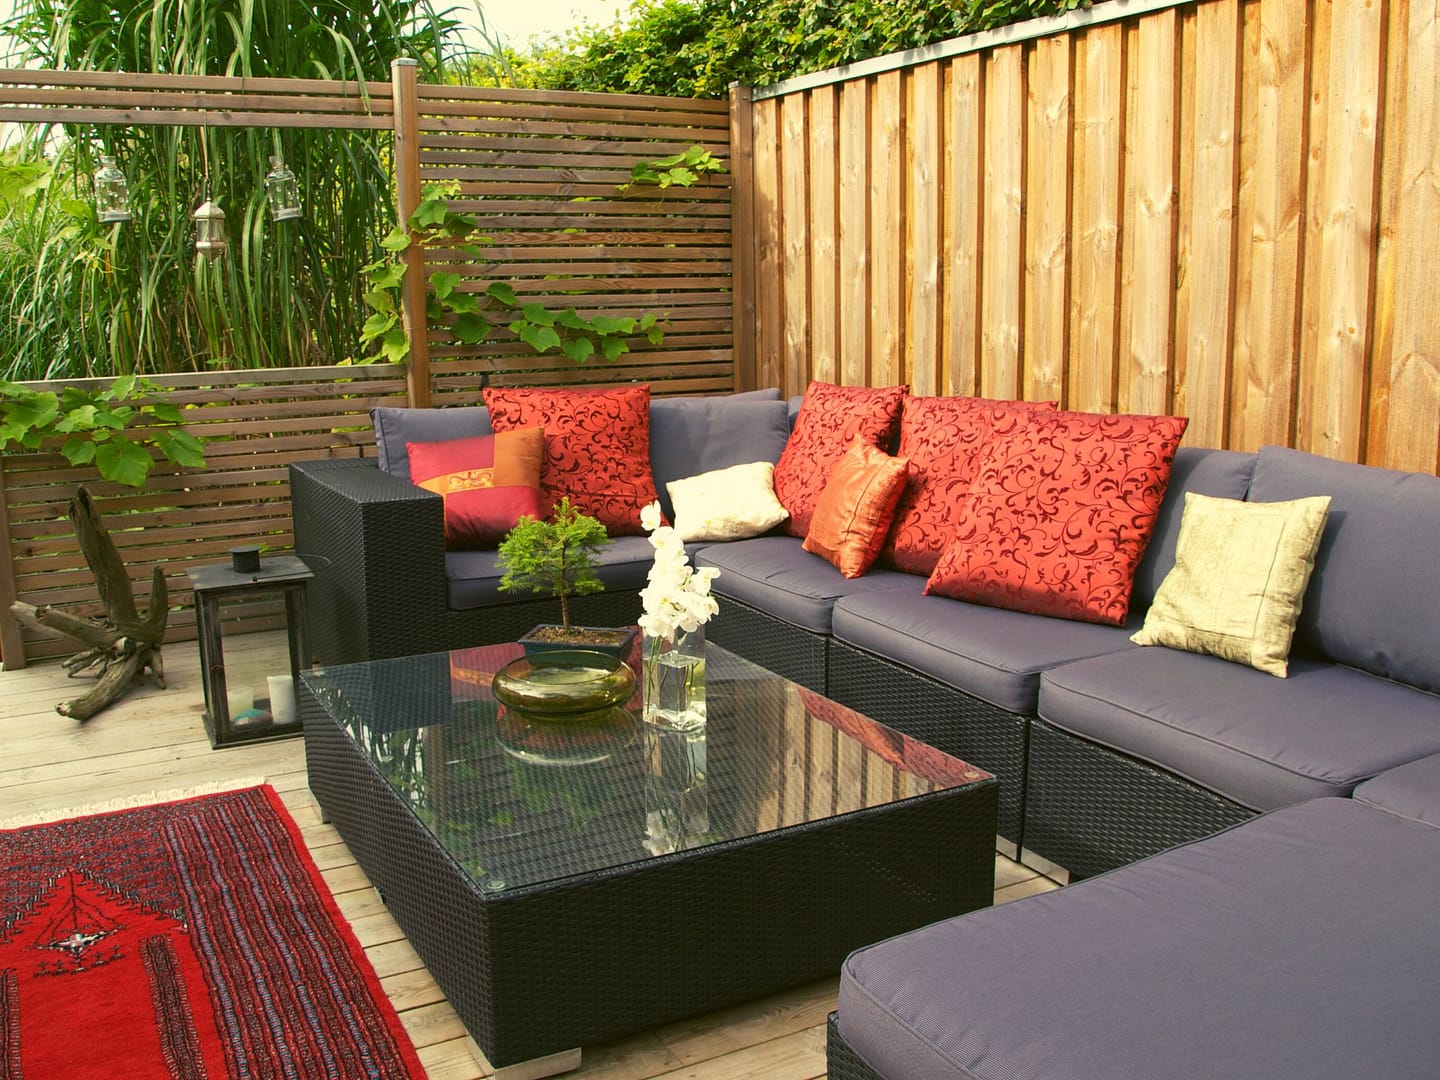 contemporary fencing surrounding patio and garden furniture